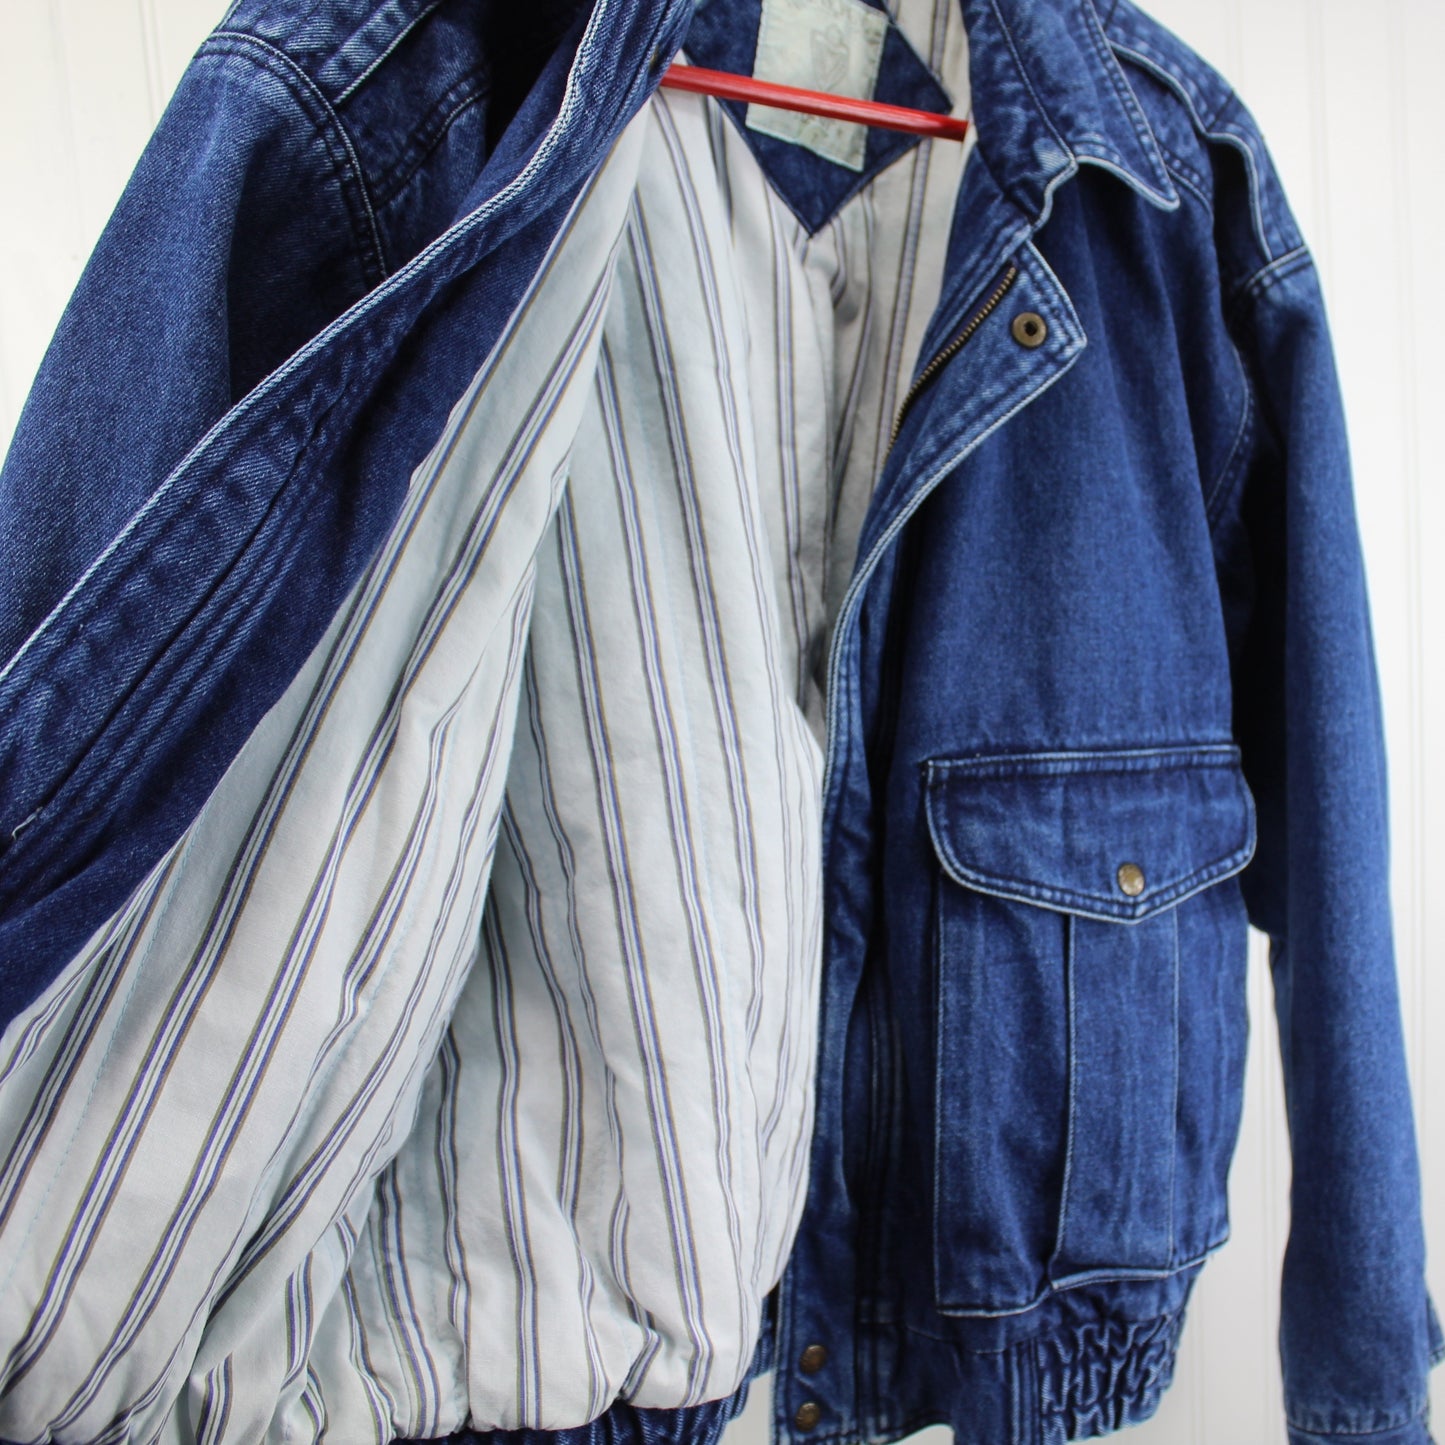 Jeans Wear Trent Blue Denim Cotton Jacket Lined Blue White Stripe Great Cut Size L cotton striped lining matches